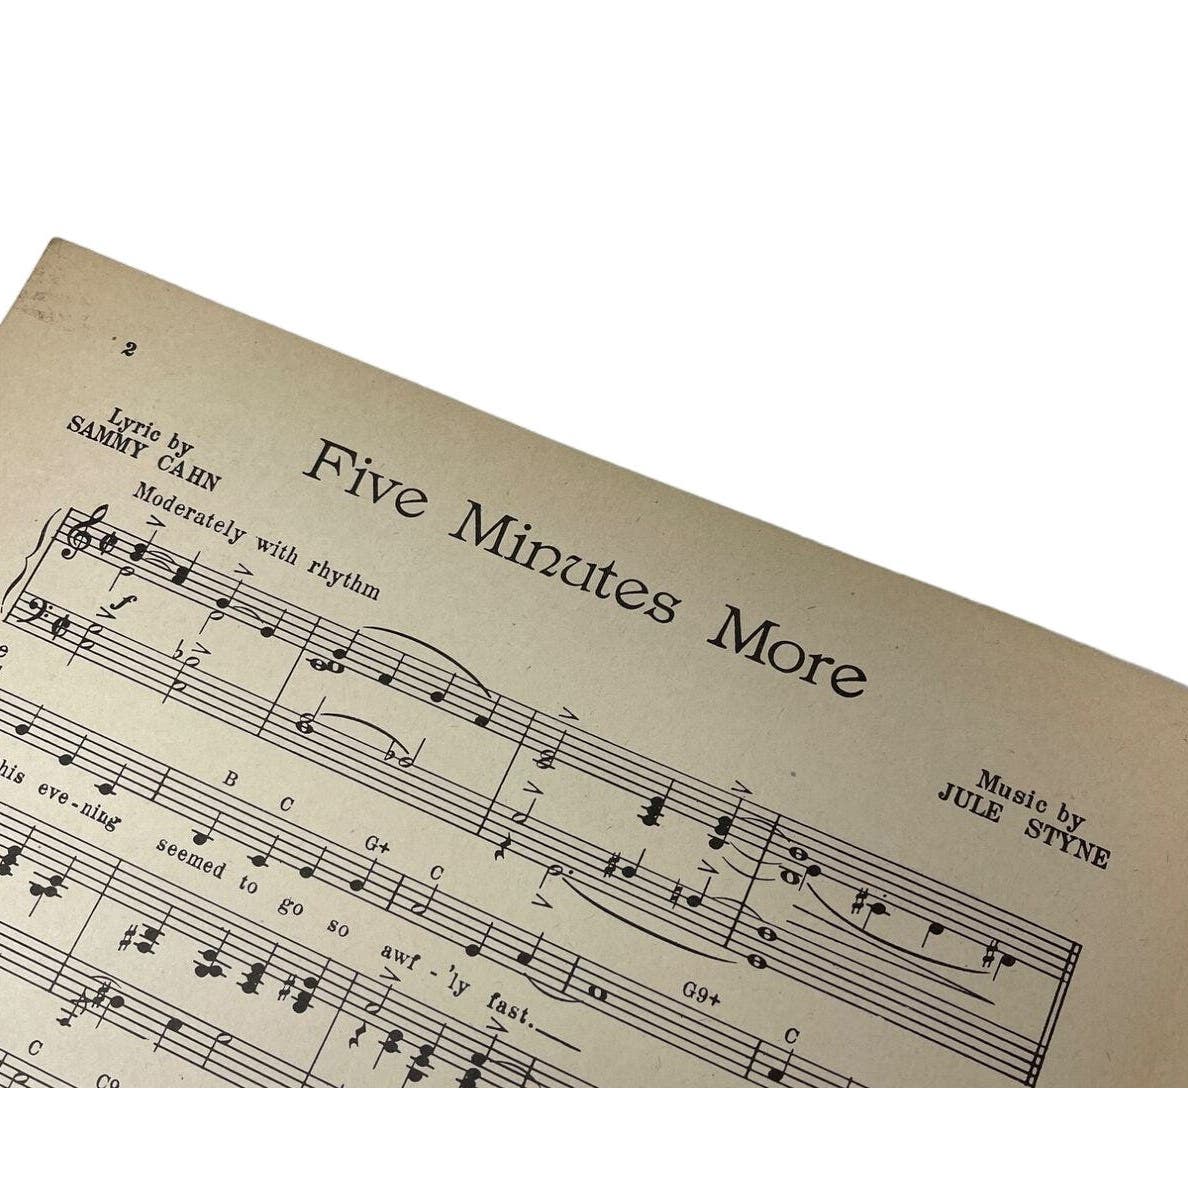 1956 Five Minutes More Sheet Music Sammy Cahn Jule Styne